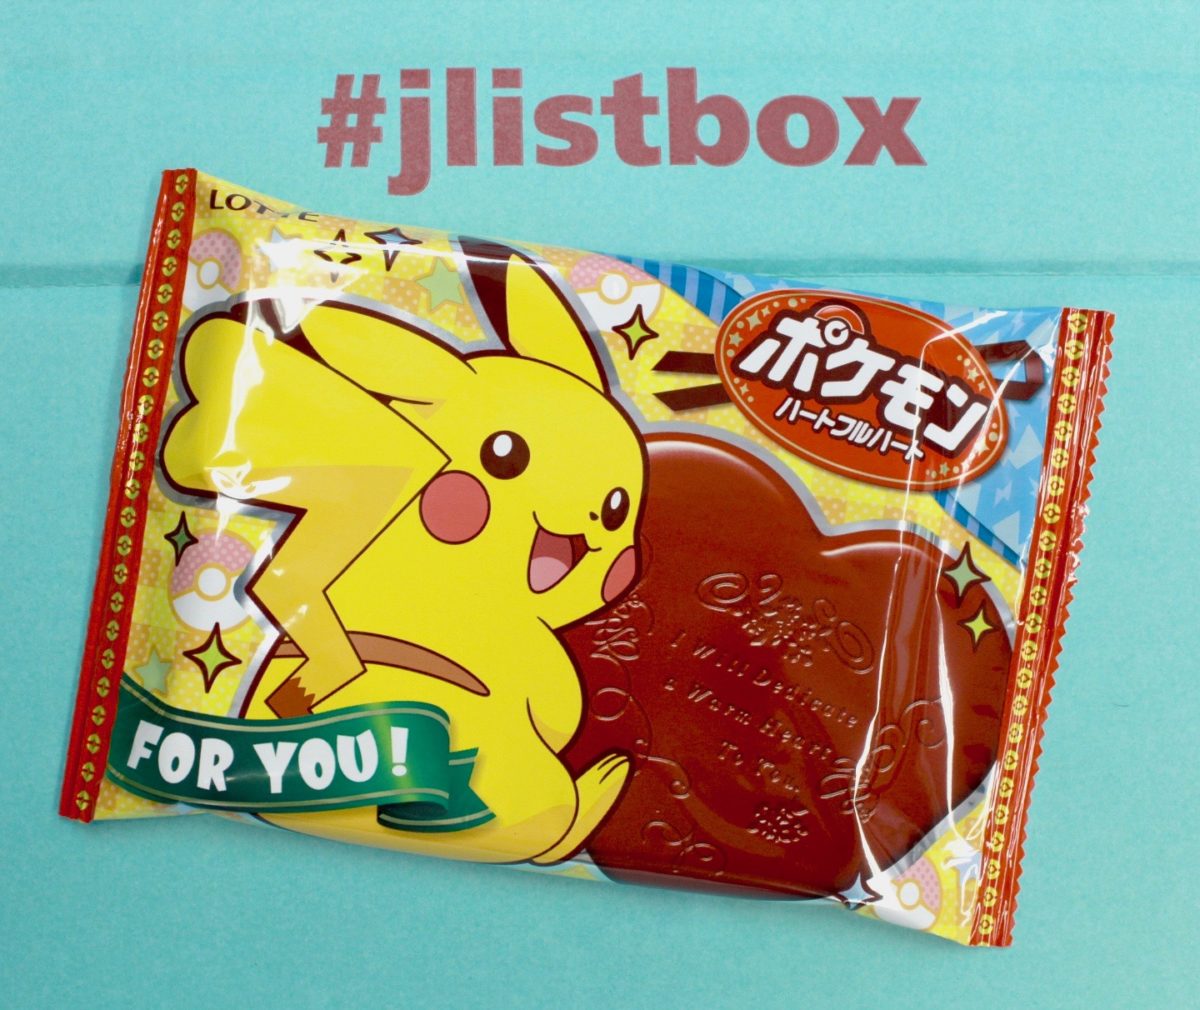 J-List Box Pikachu Heart Chocolate